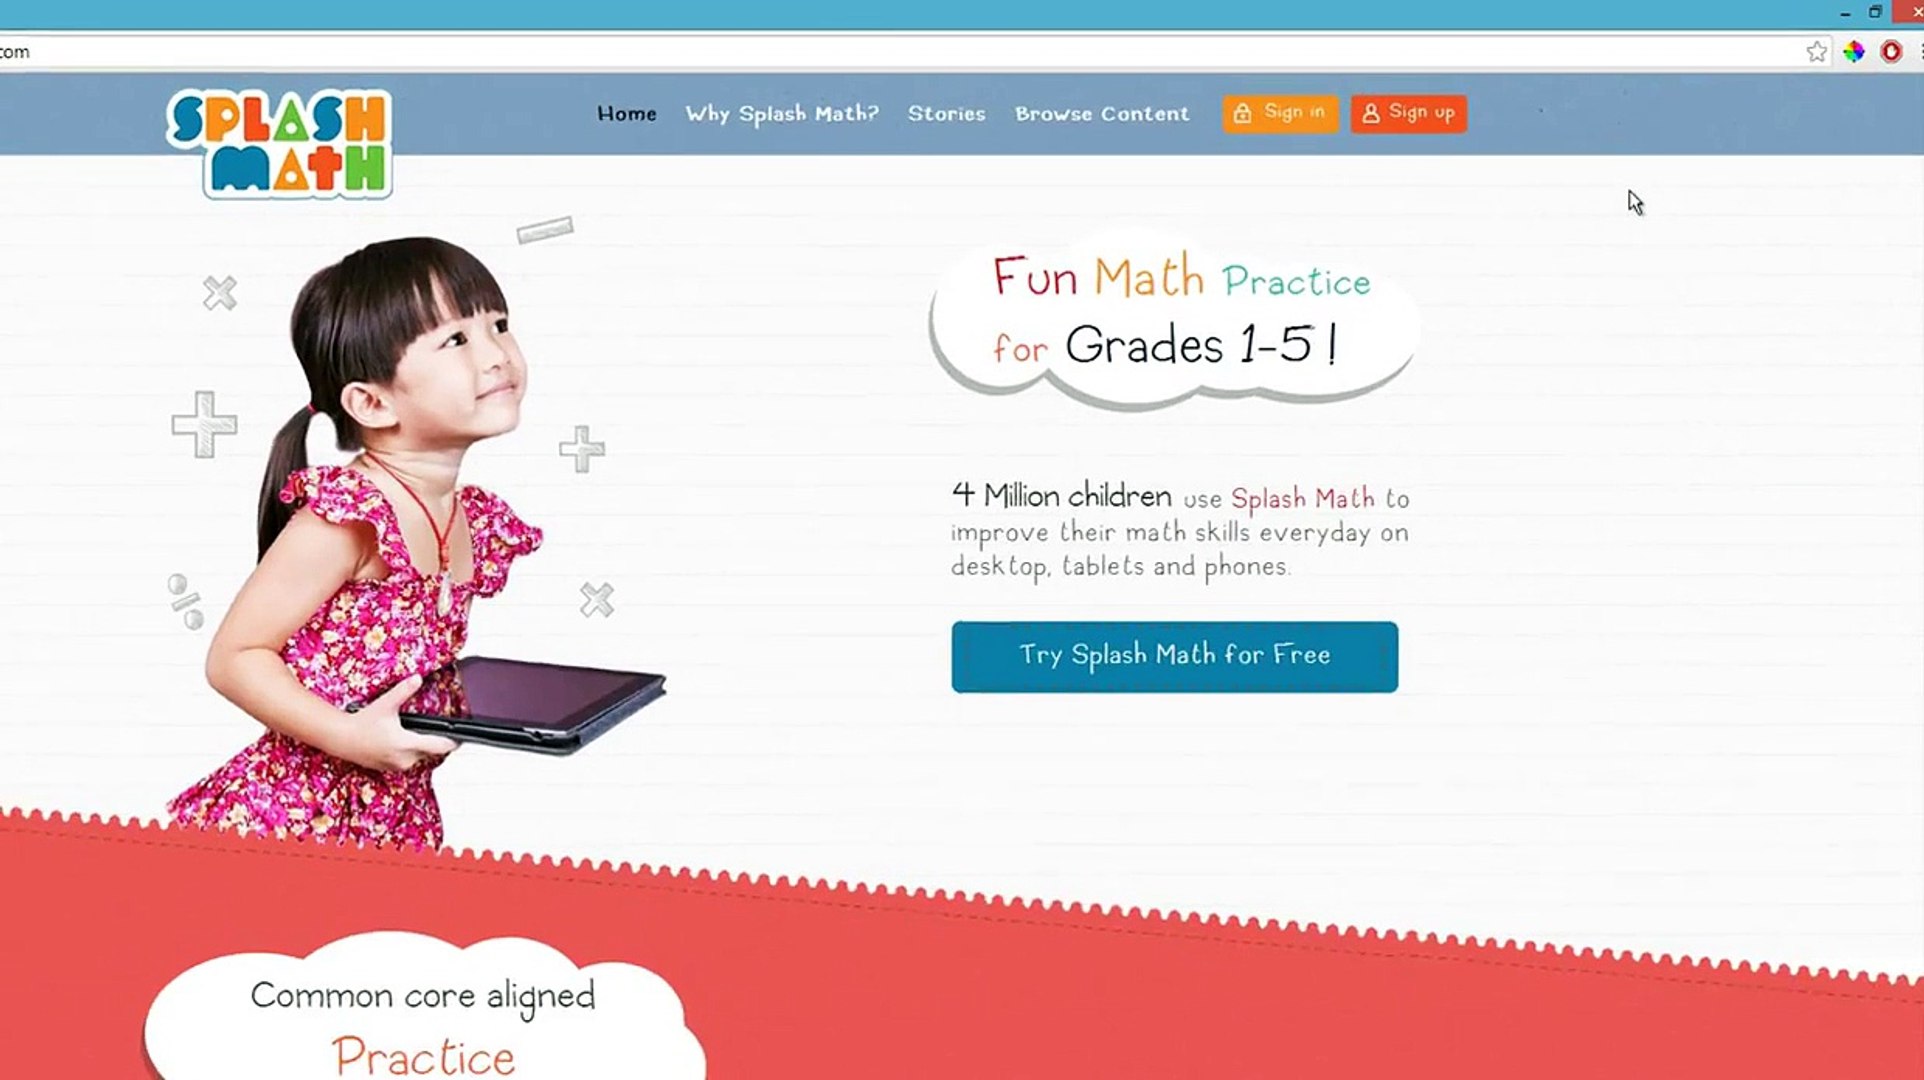 Splash Math - Fun Math Practice For Kids (Quick Tour)